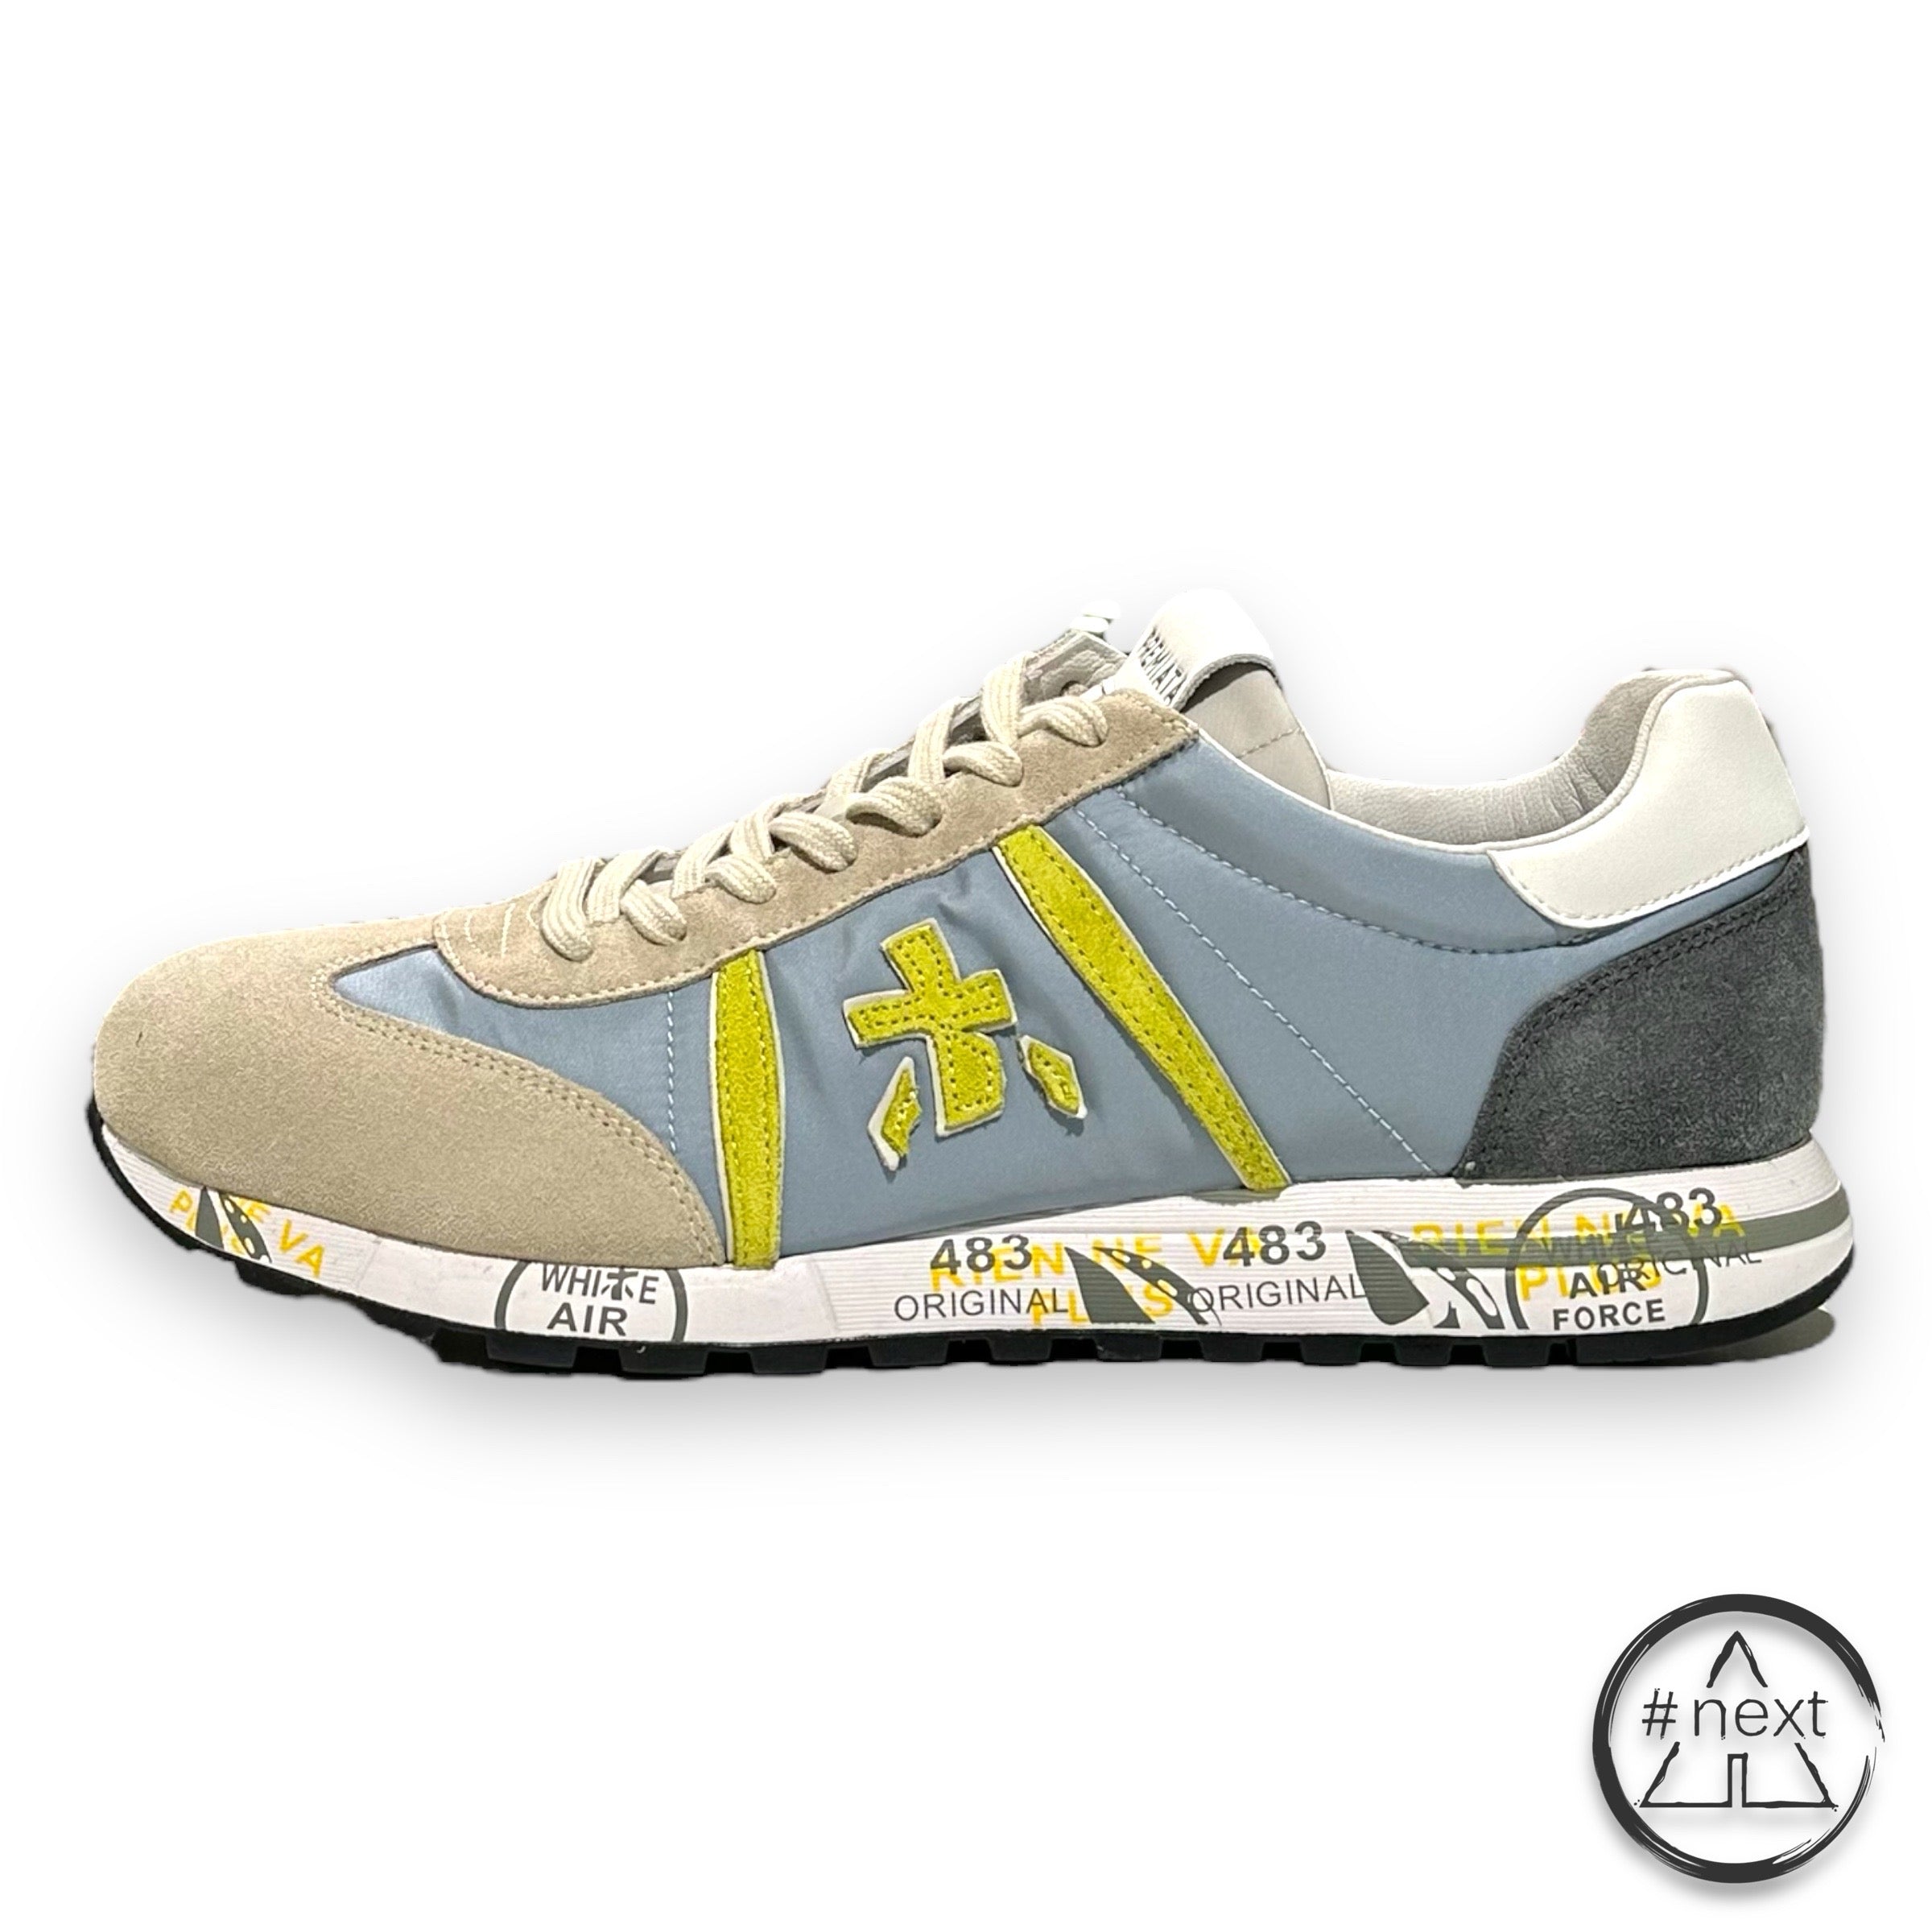 (#B) Premiata - sneakers LUCY var. 6619 - Azzurro, lime, beige. - ANDY #NEXT